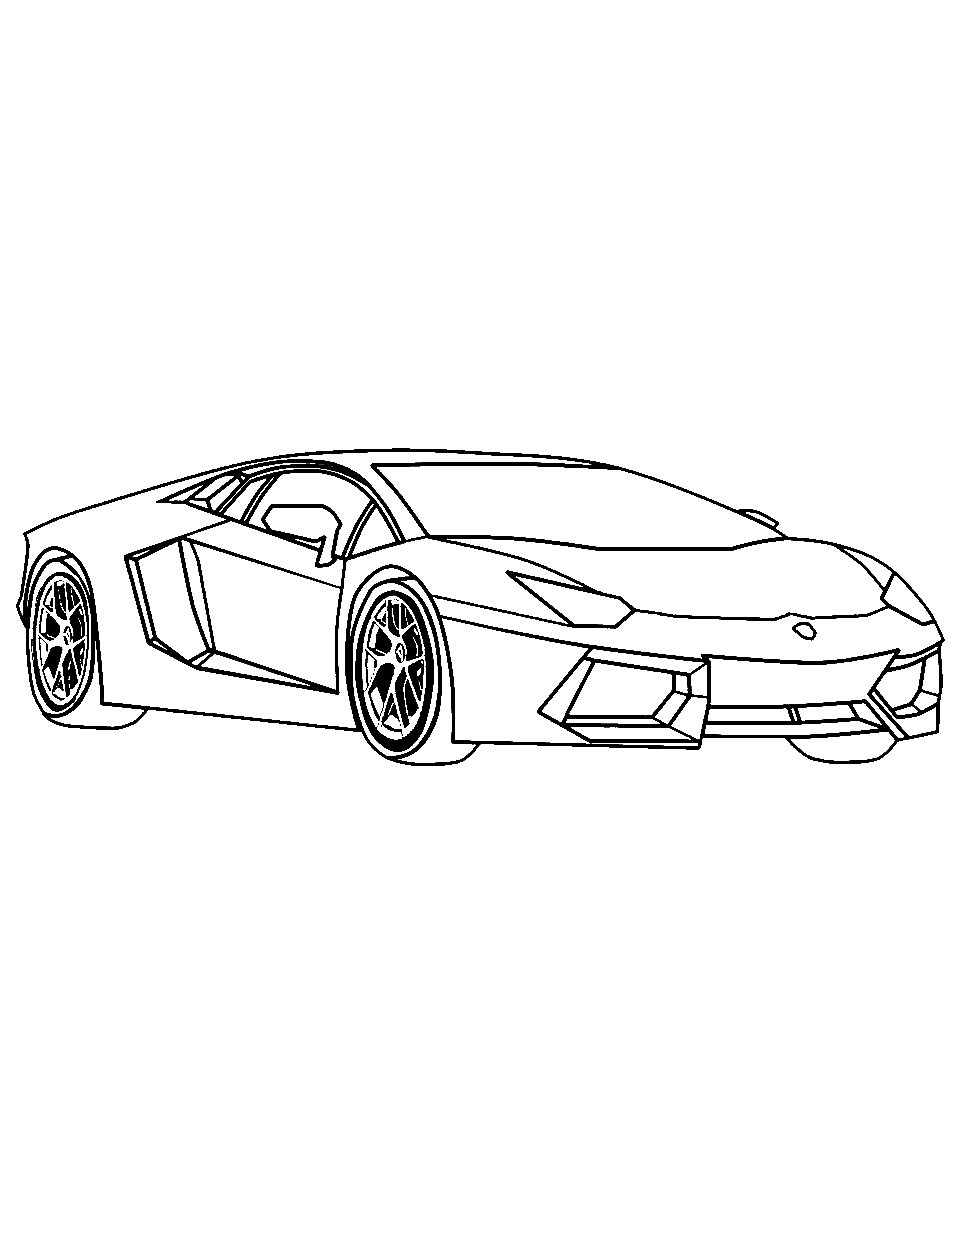 Hypercar Highlight Race Car Coloring Page - A modern hypercar with advanced aerodynamics.